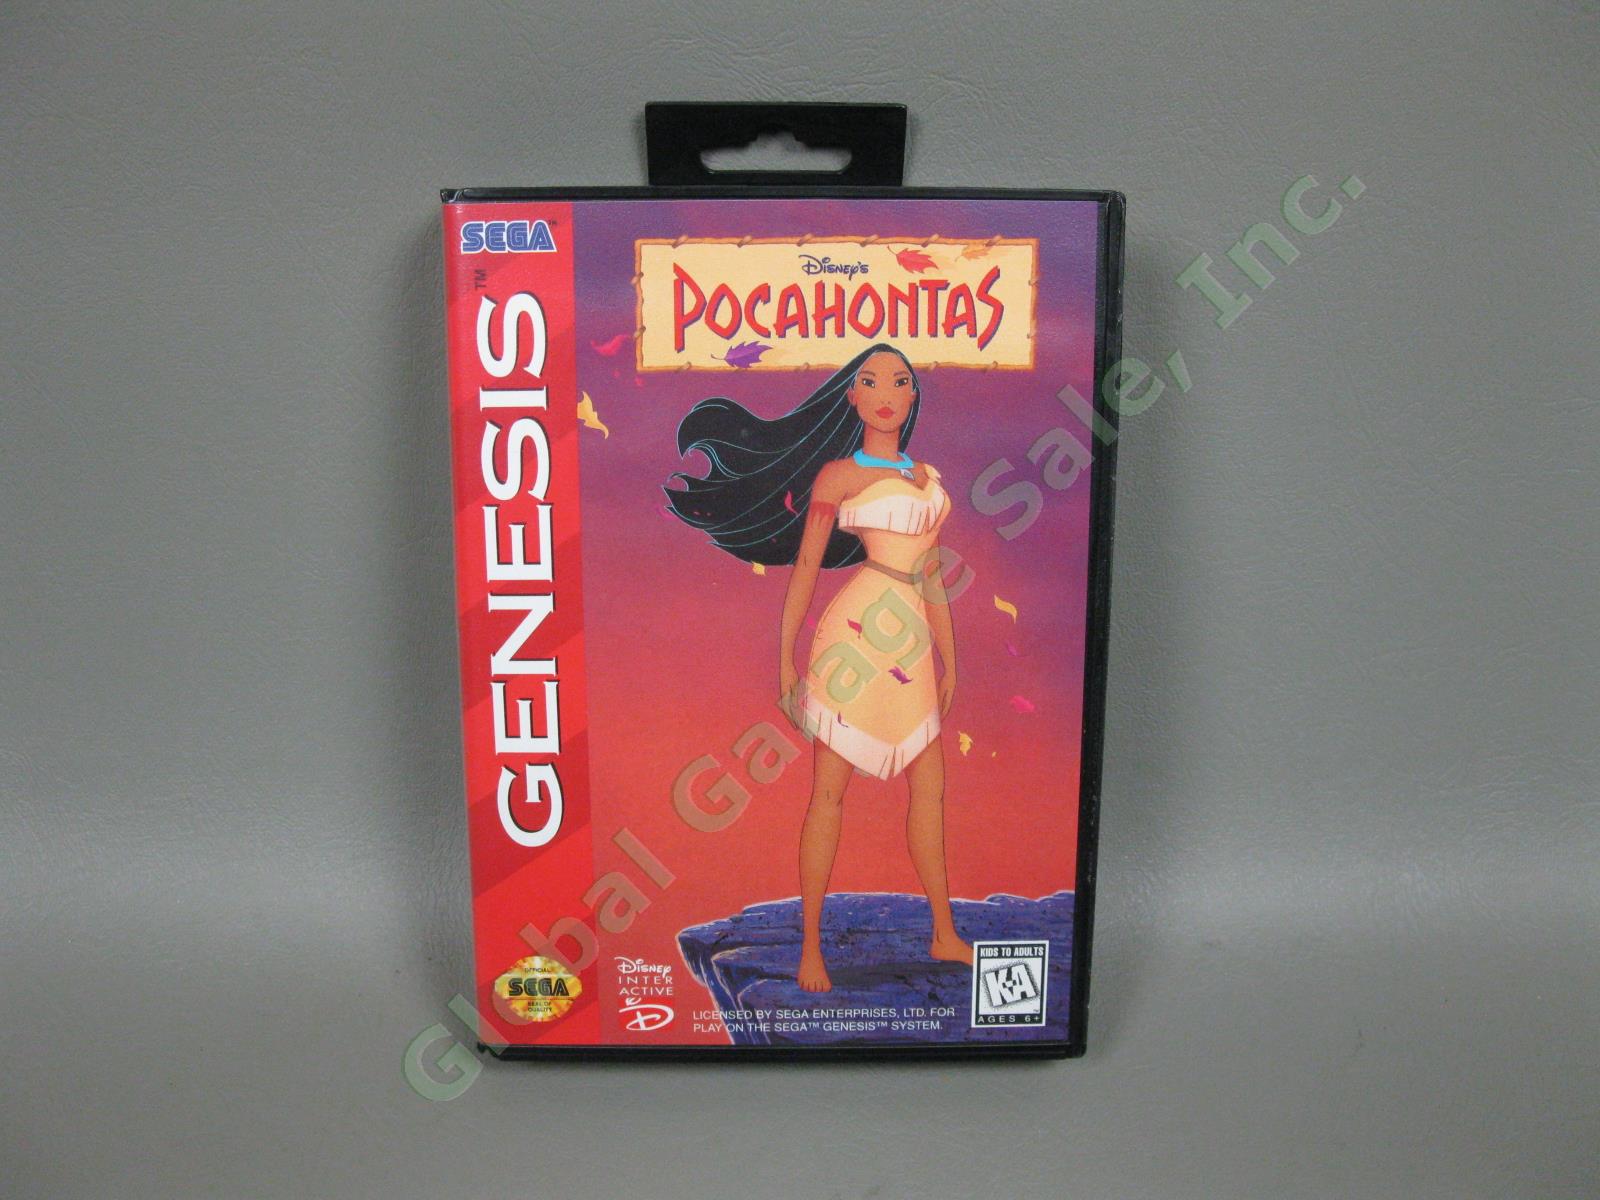 Sega Genesis Pocahontas Video Game Complete In Case w/ Cartridge Insert & Poster 1